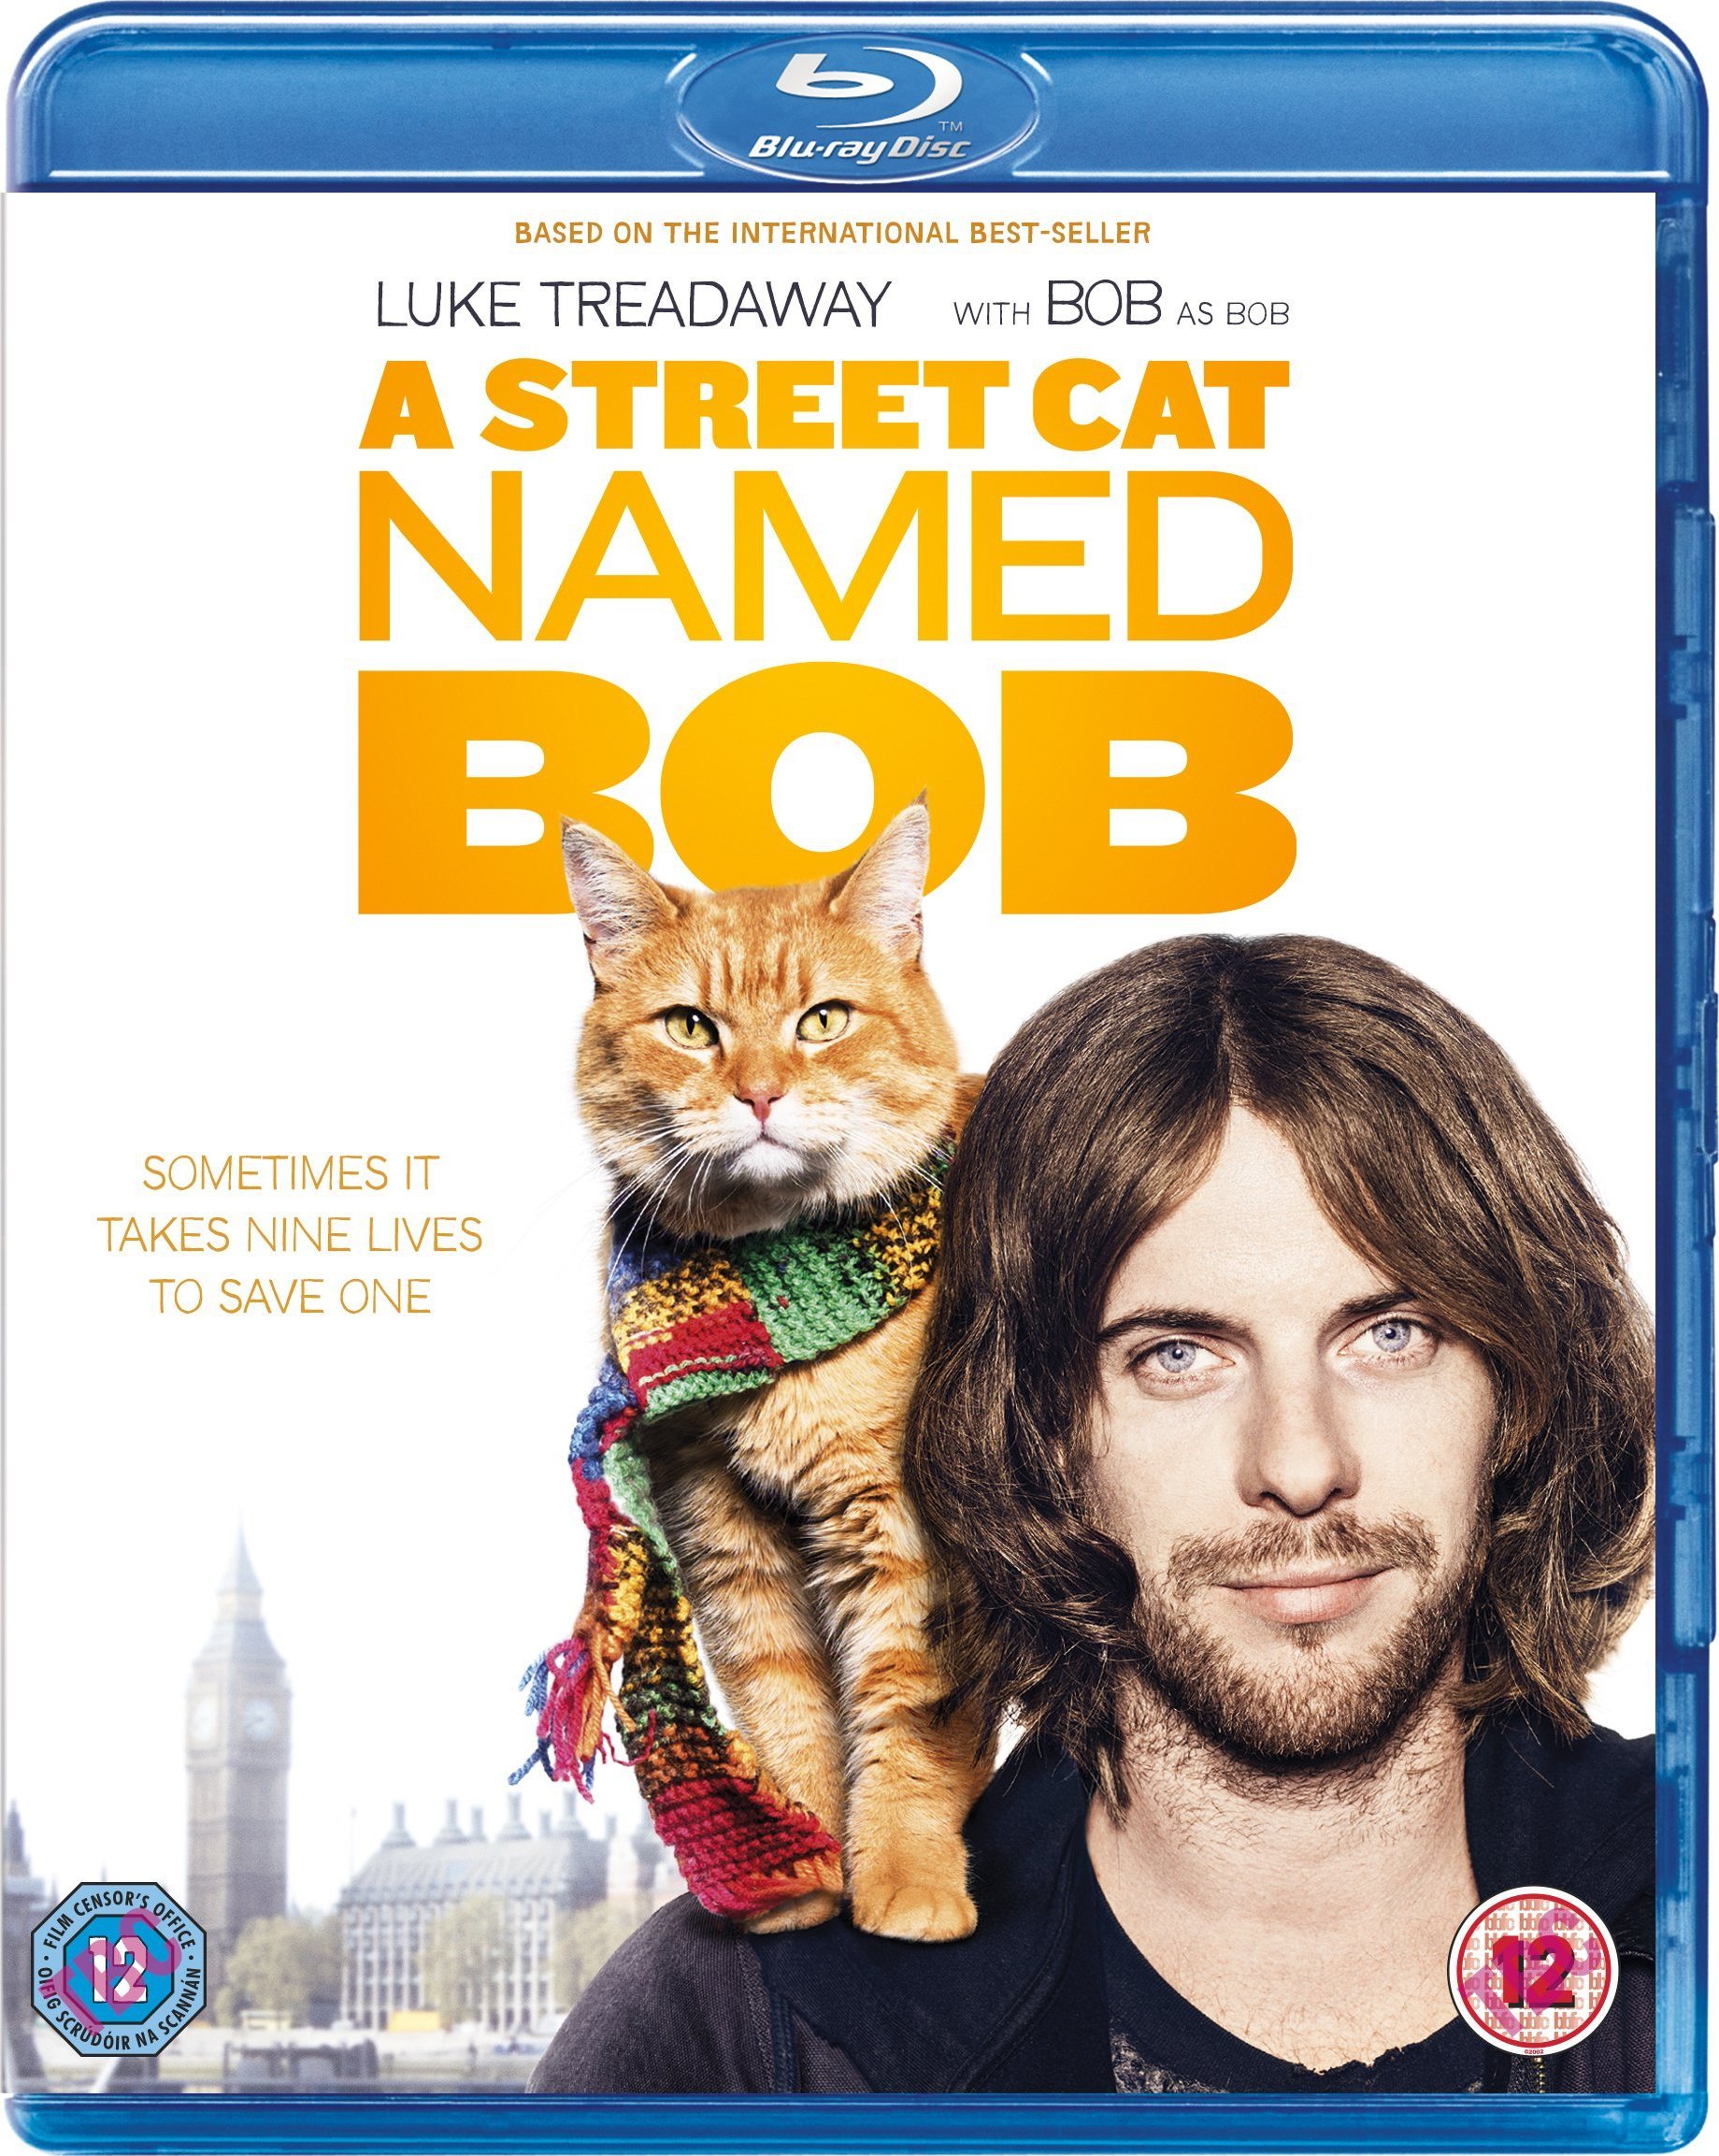 [流浪猫鲍勃].A.Street.Cat.Named.Bob.2016.BluRay.1080p.AVC.DTS-HD.MA.5.1-LianHH@CHDBits    34.13G-1.jpg